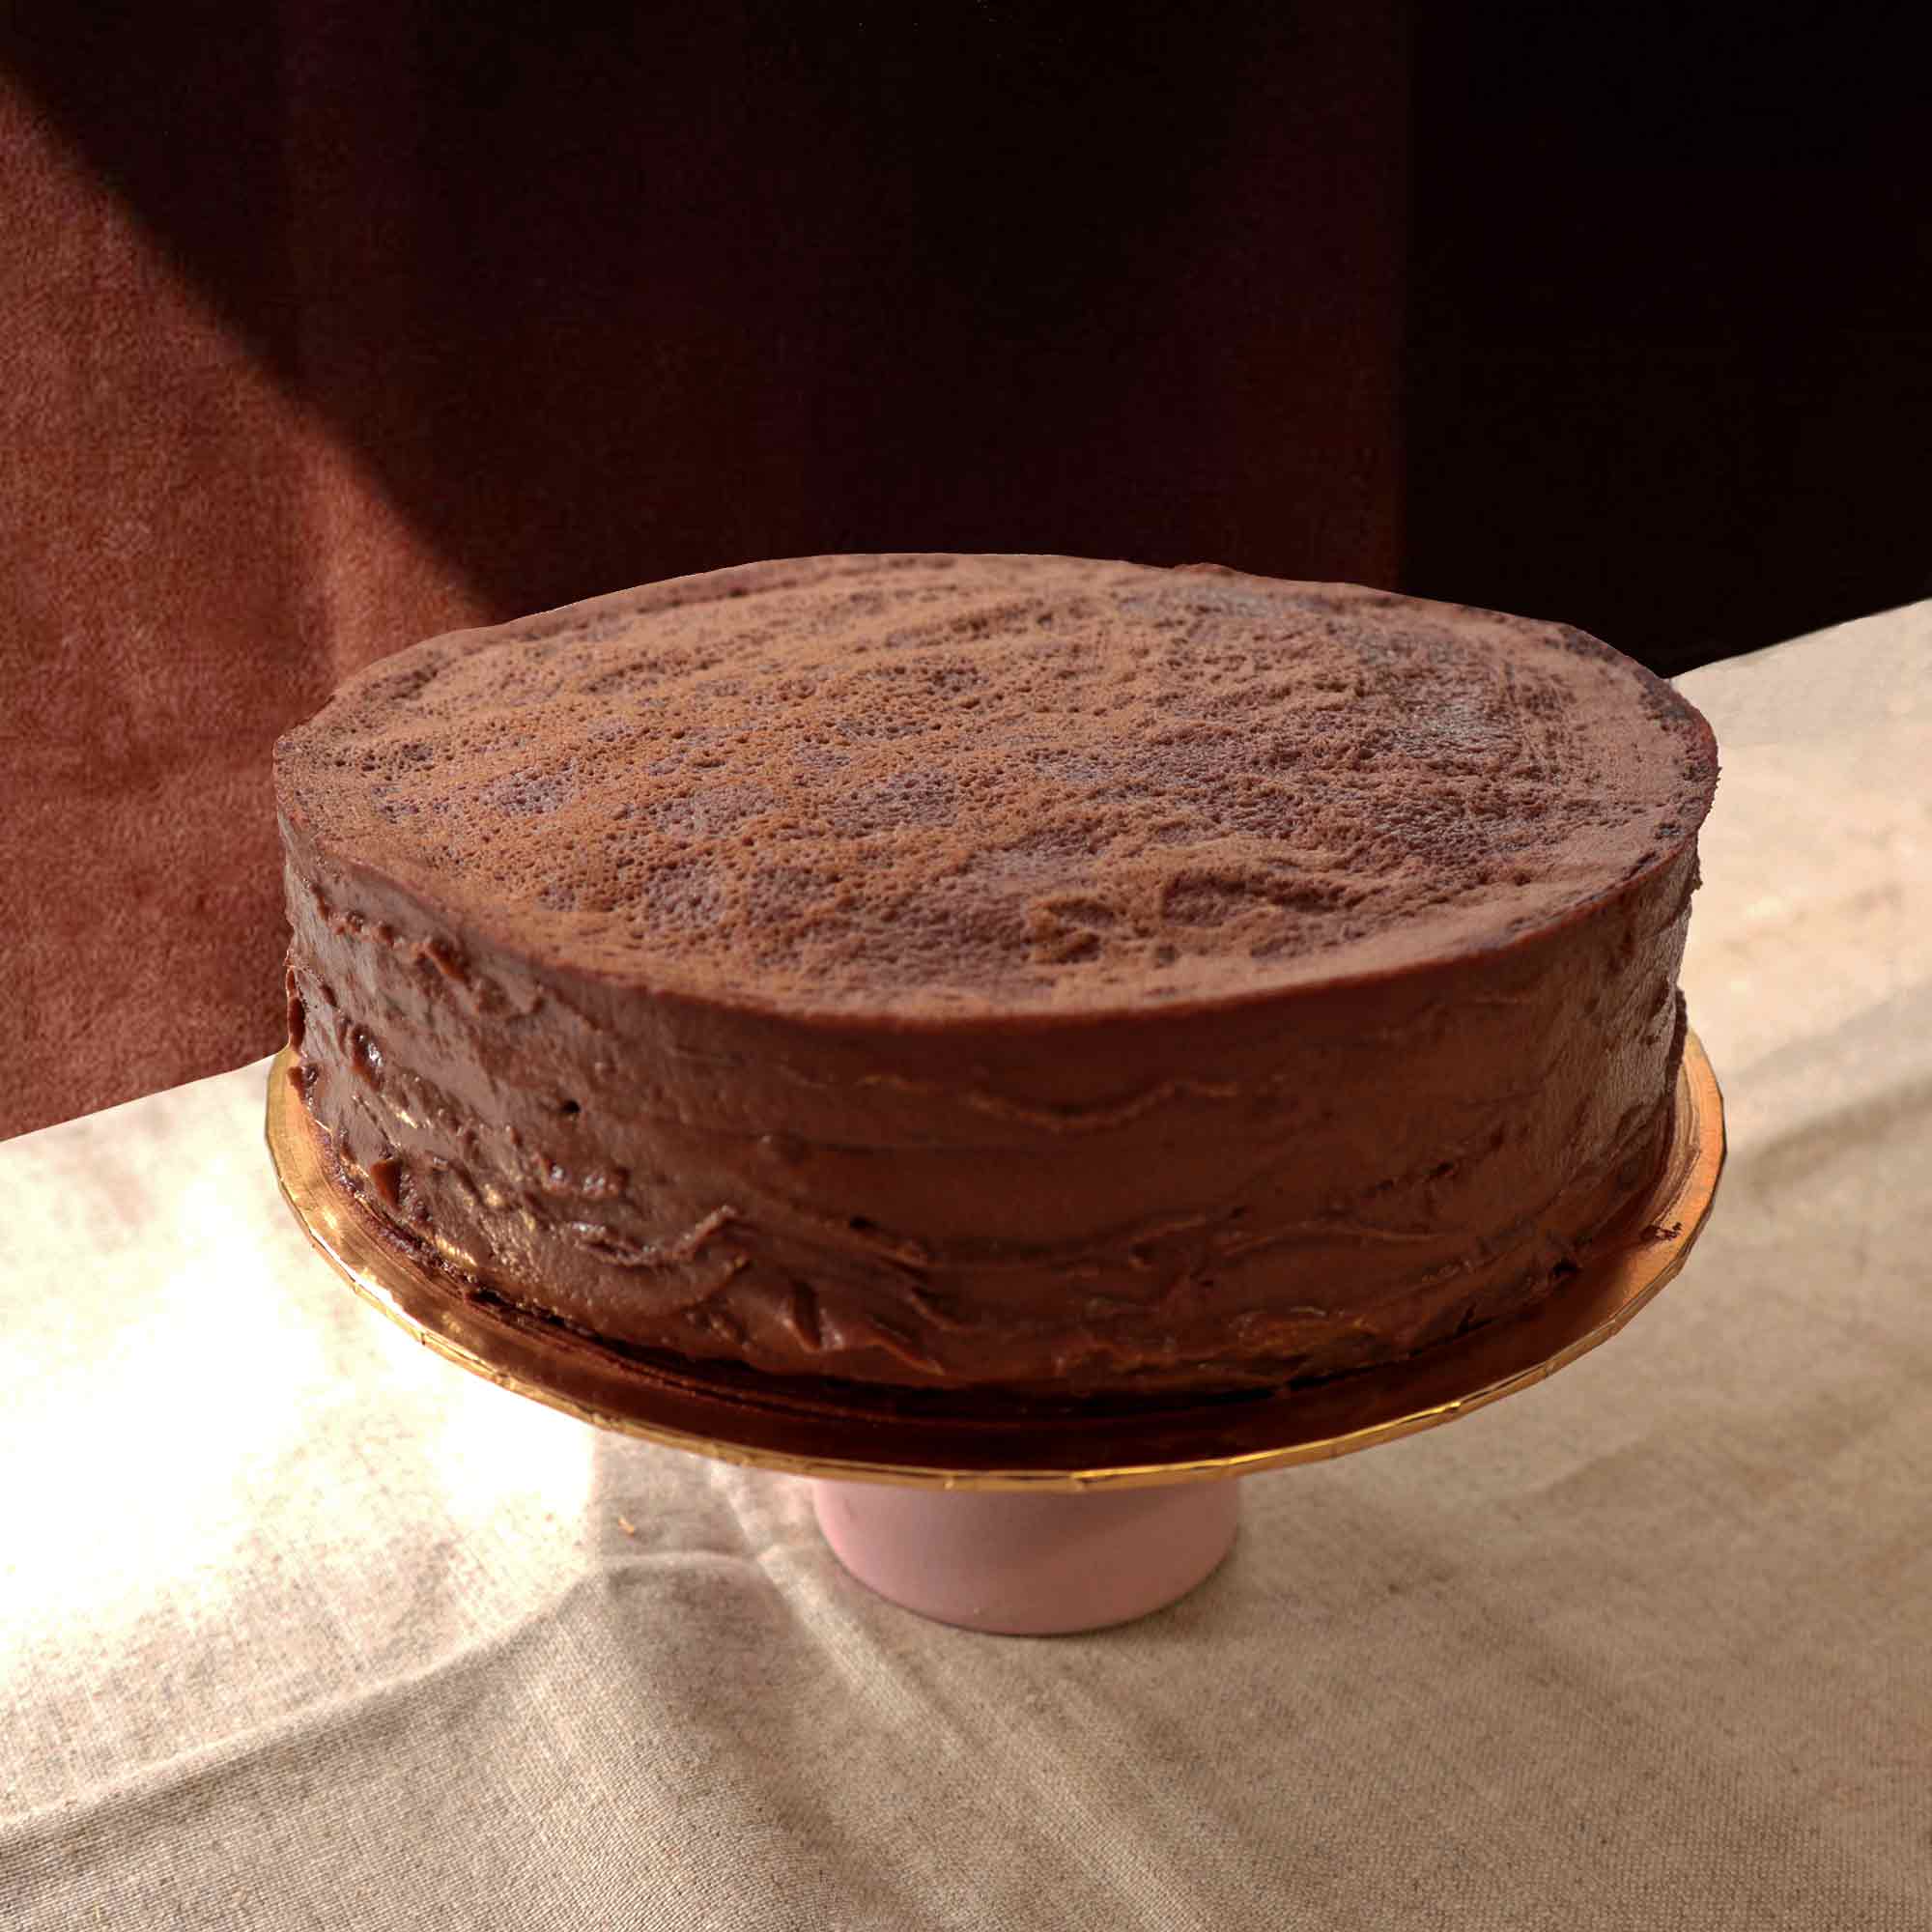 ALL CHOCOLATE CAKE - Awfully Chocolate